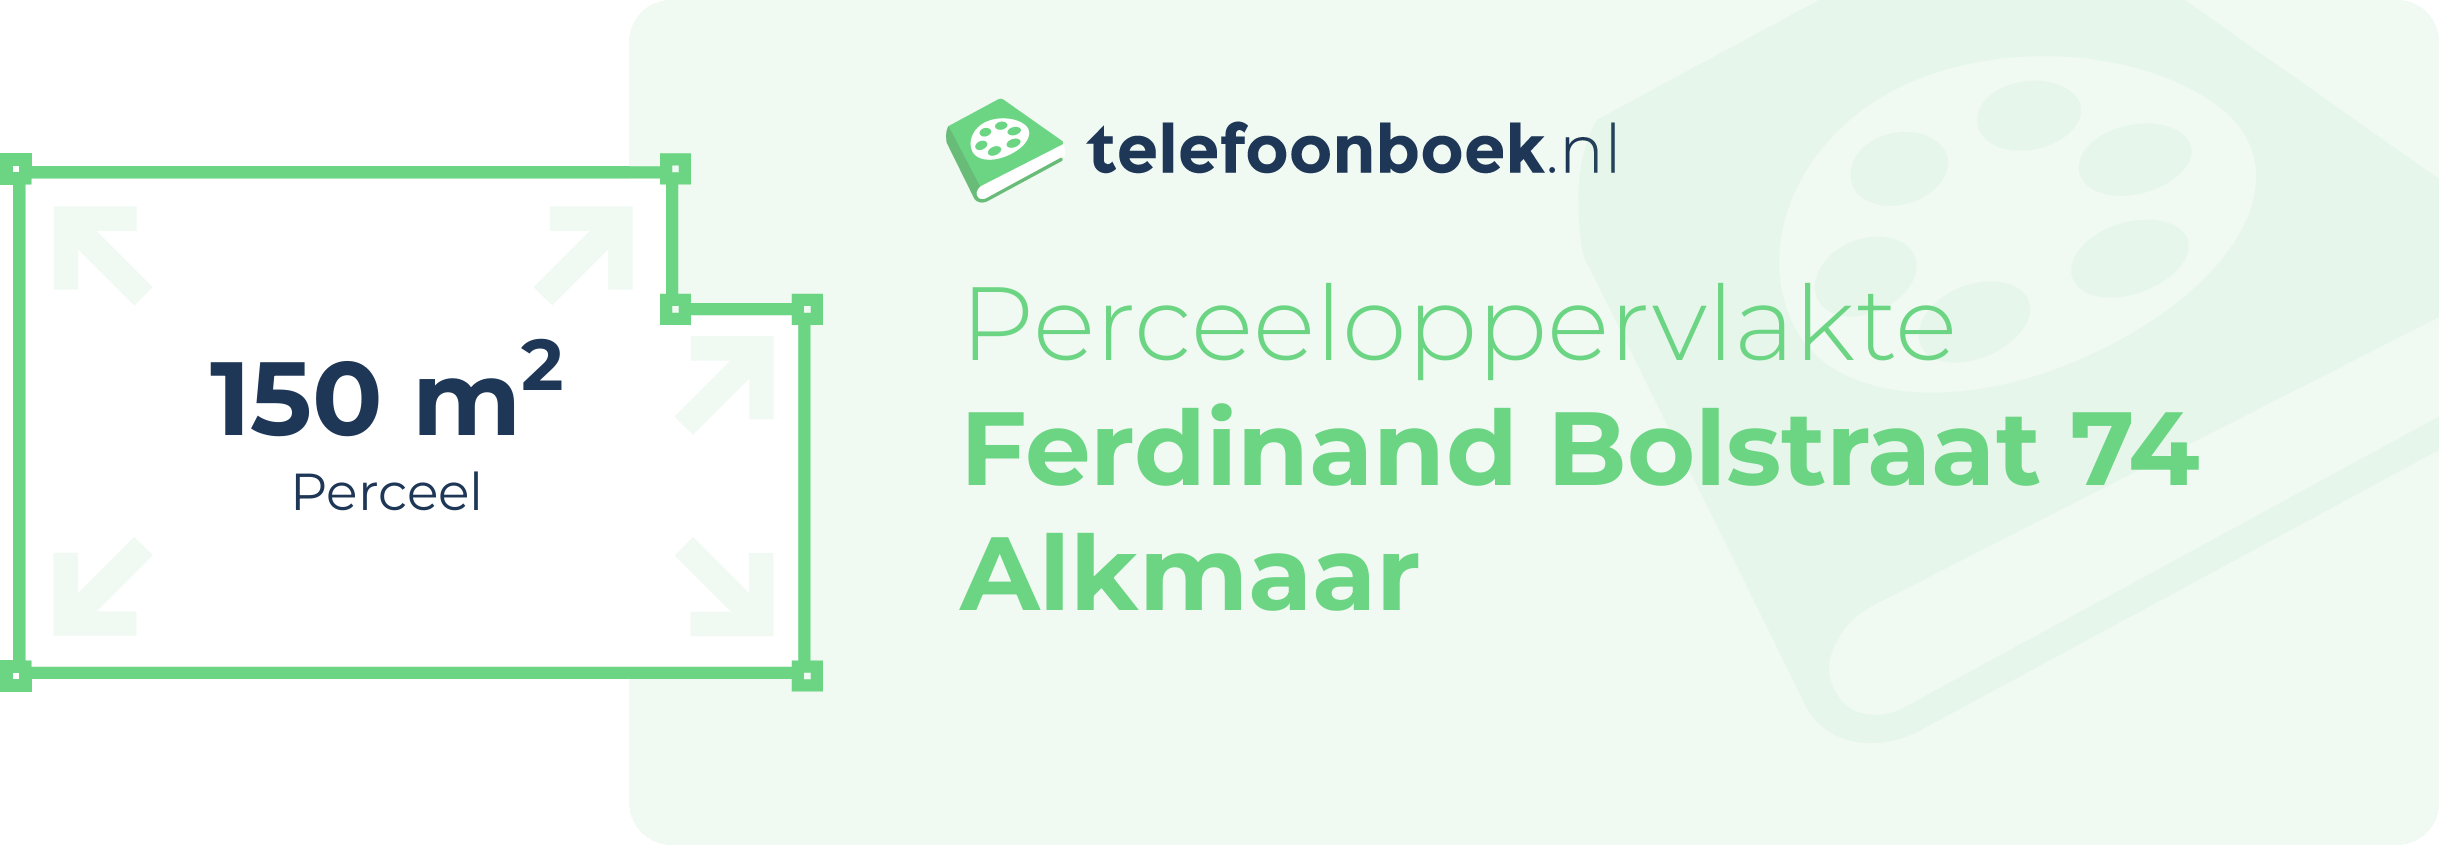 Perceeloppervlakte Ferdinand Bolstraat 74 Alkmaar